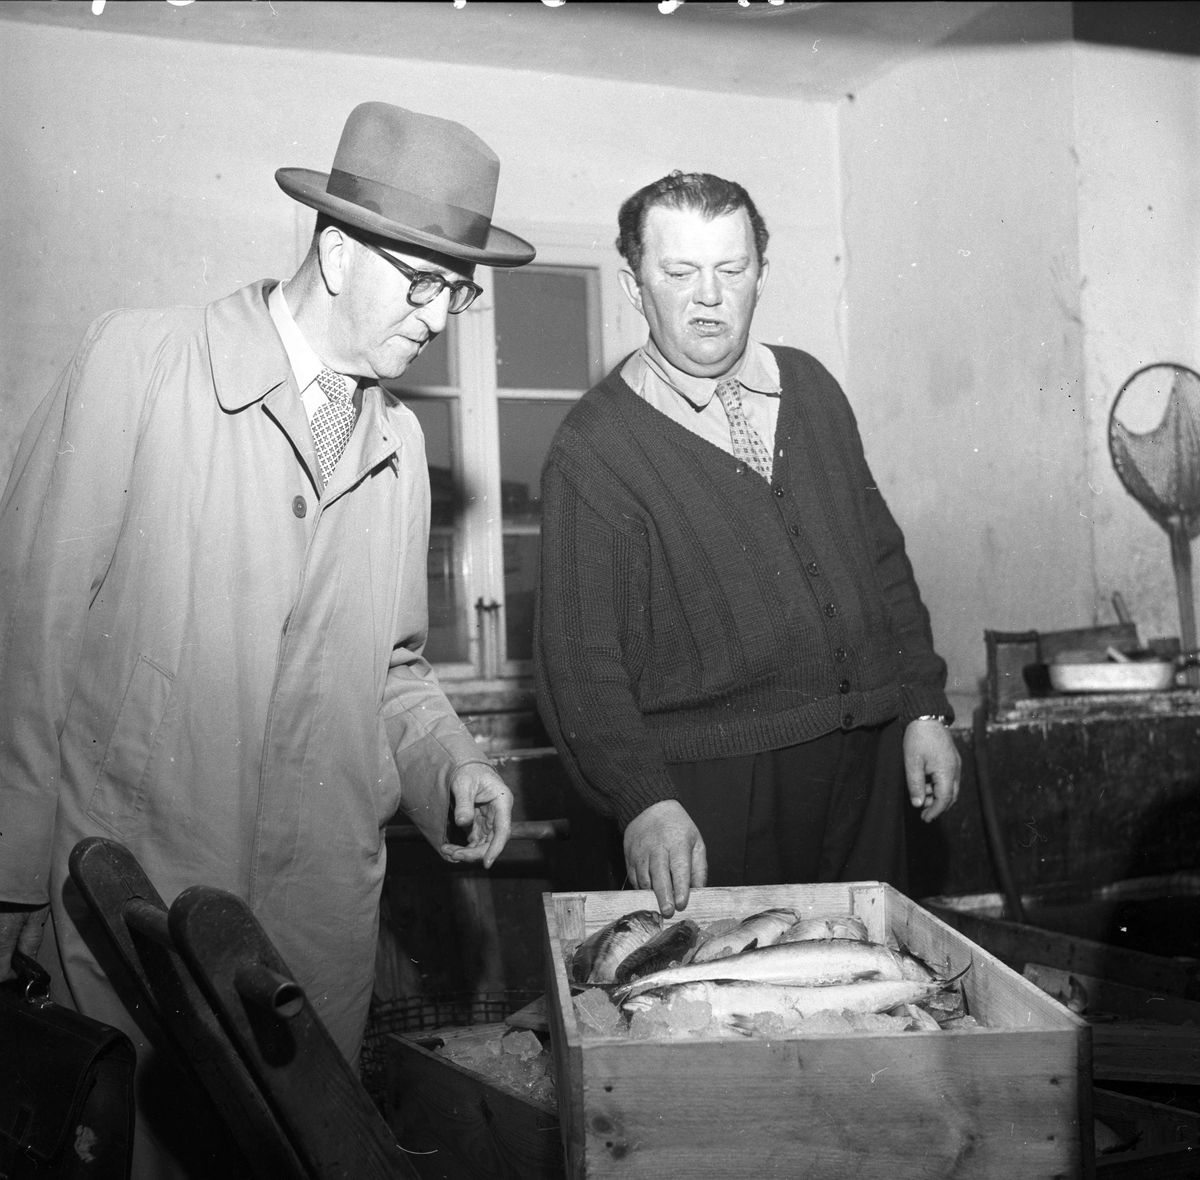 Arendal, 23.05.1958. Menn rundt fiskekasse, antakelig hos fiskehandler.